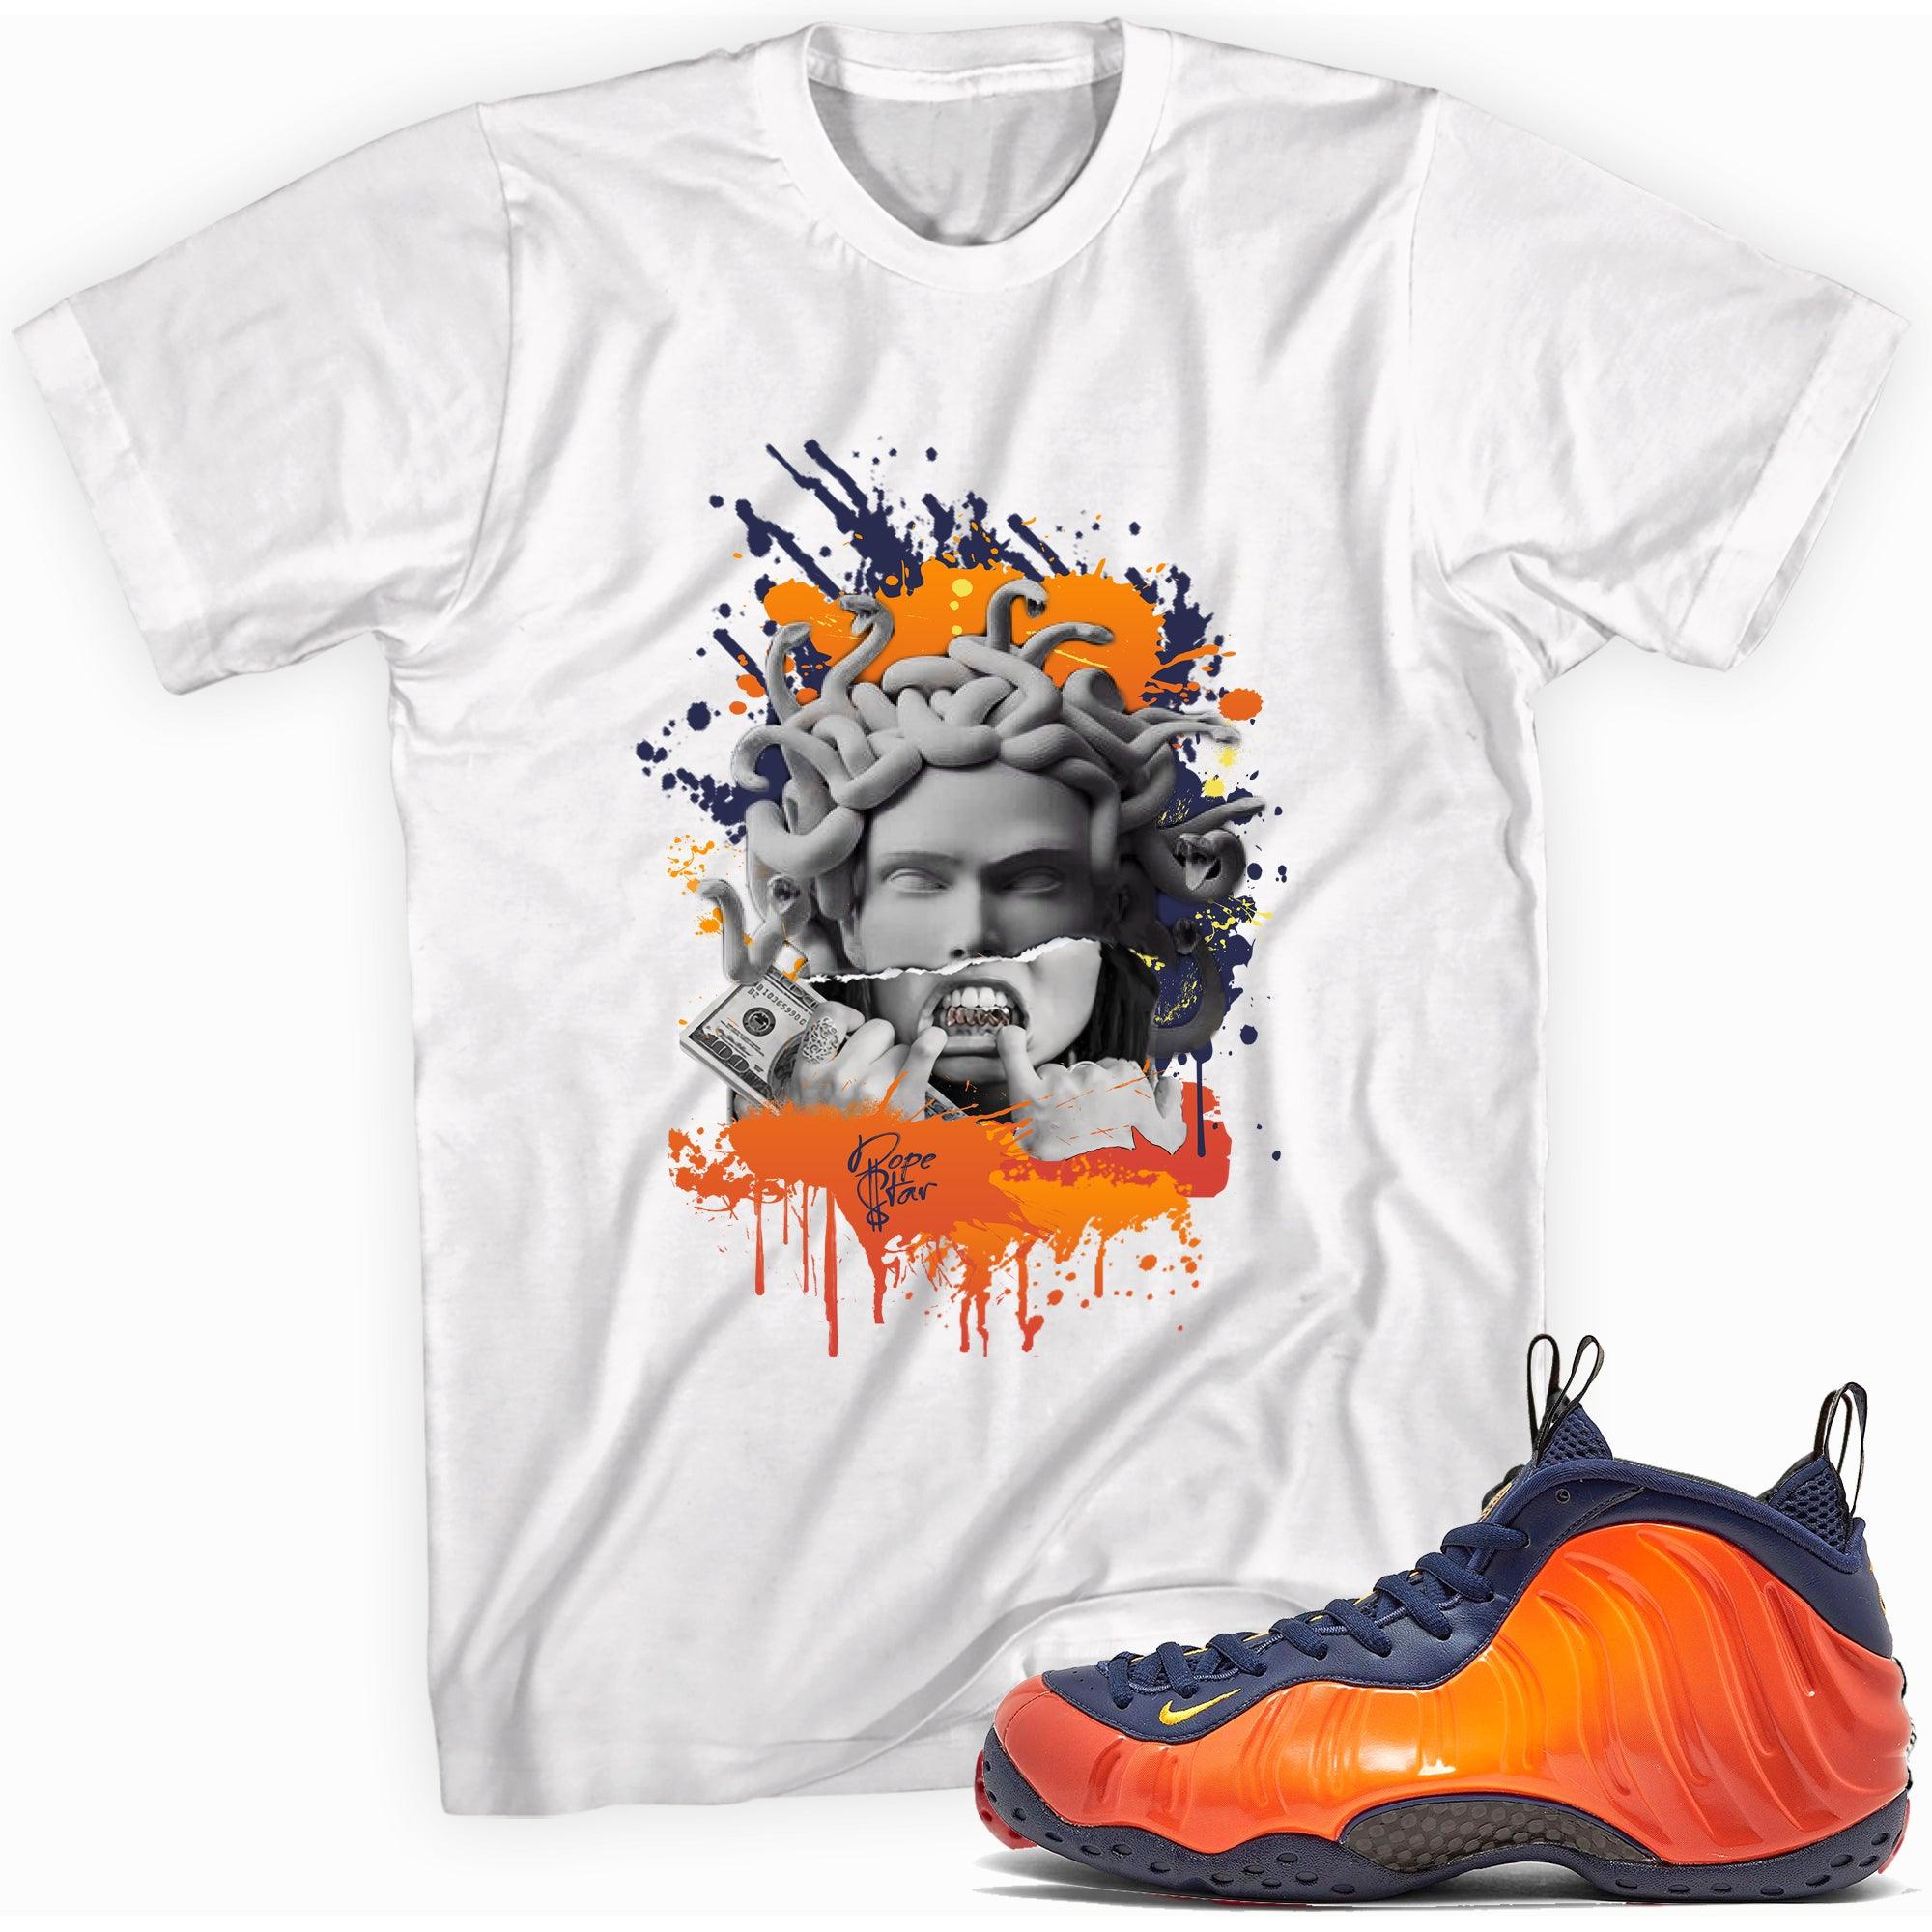 Medusa Shirt Nike Air Foamposite One Blud Void Rugged Orange photo